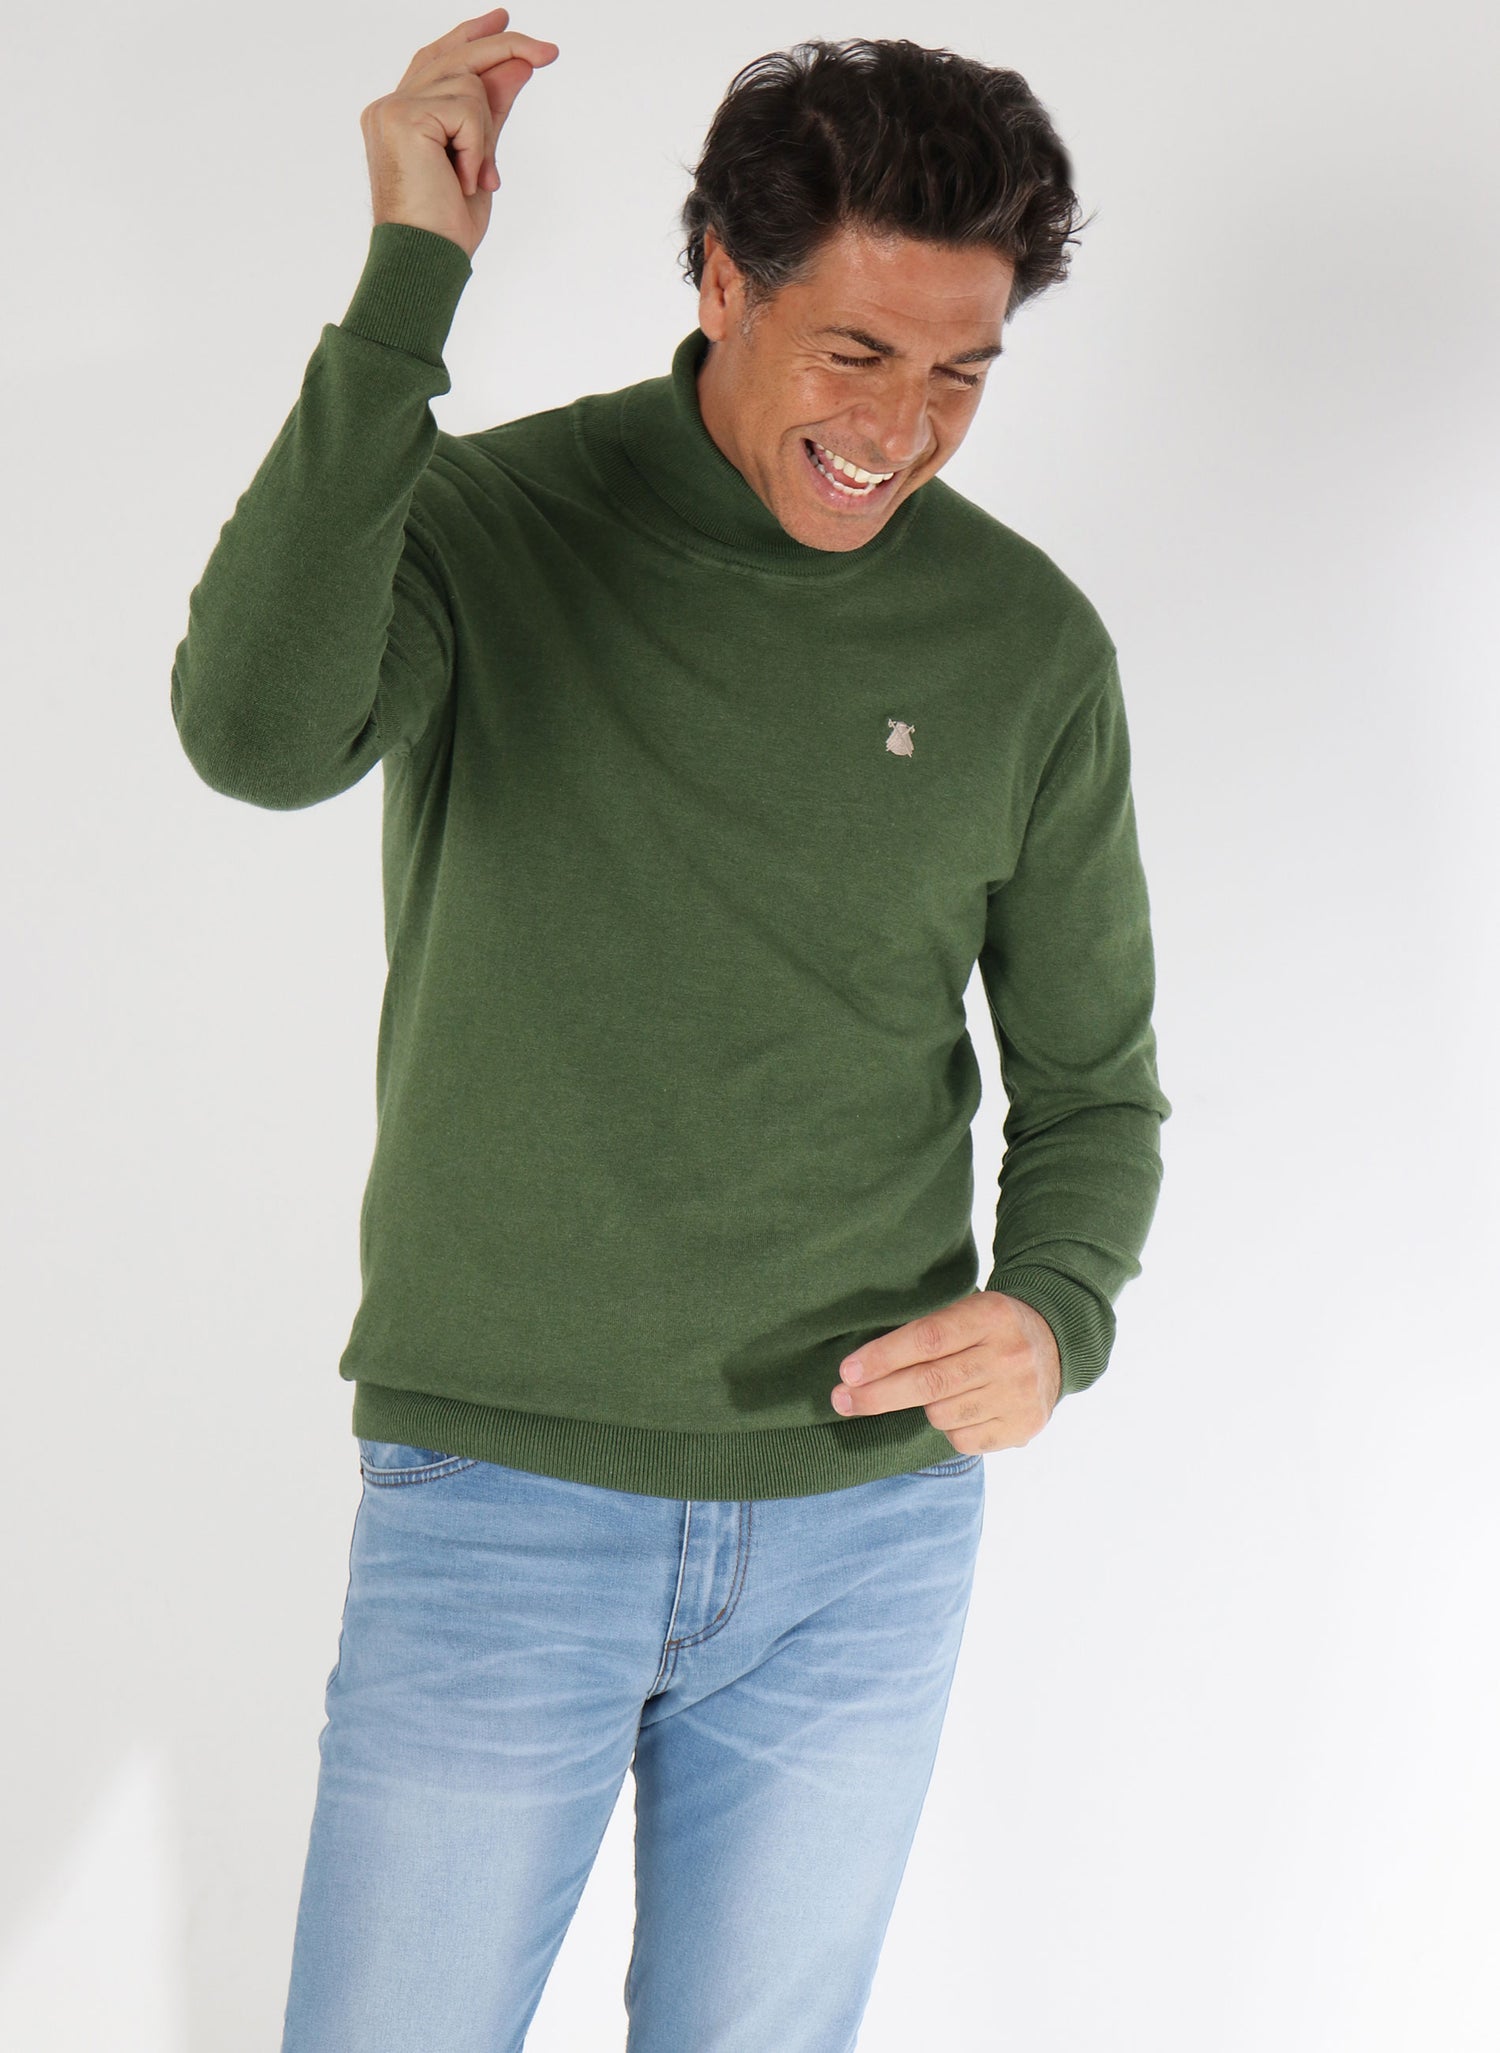 Green Turtleneck Sweater Man